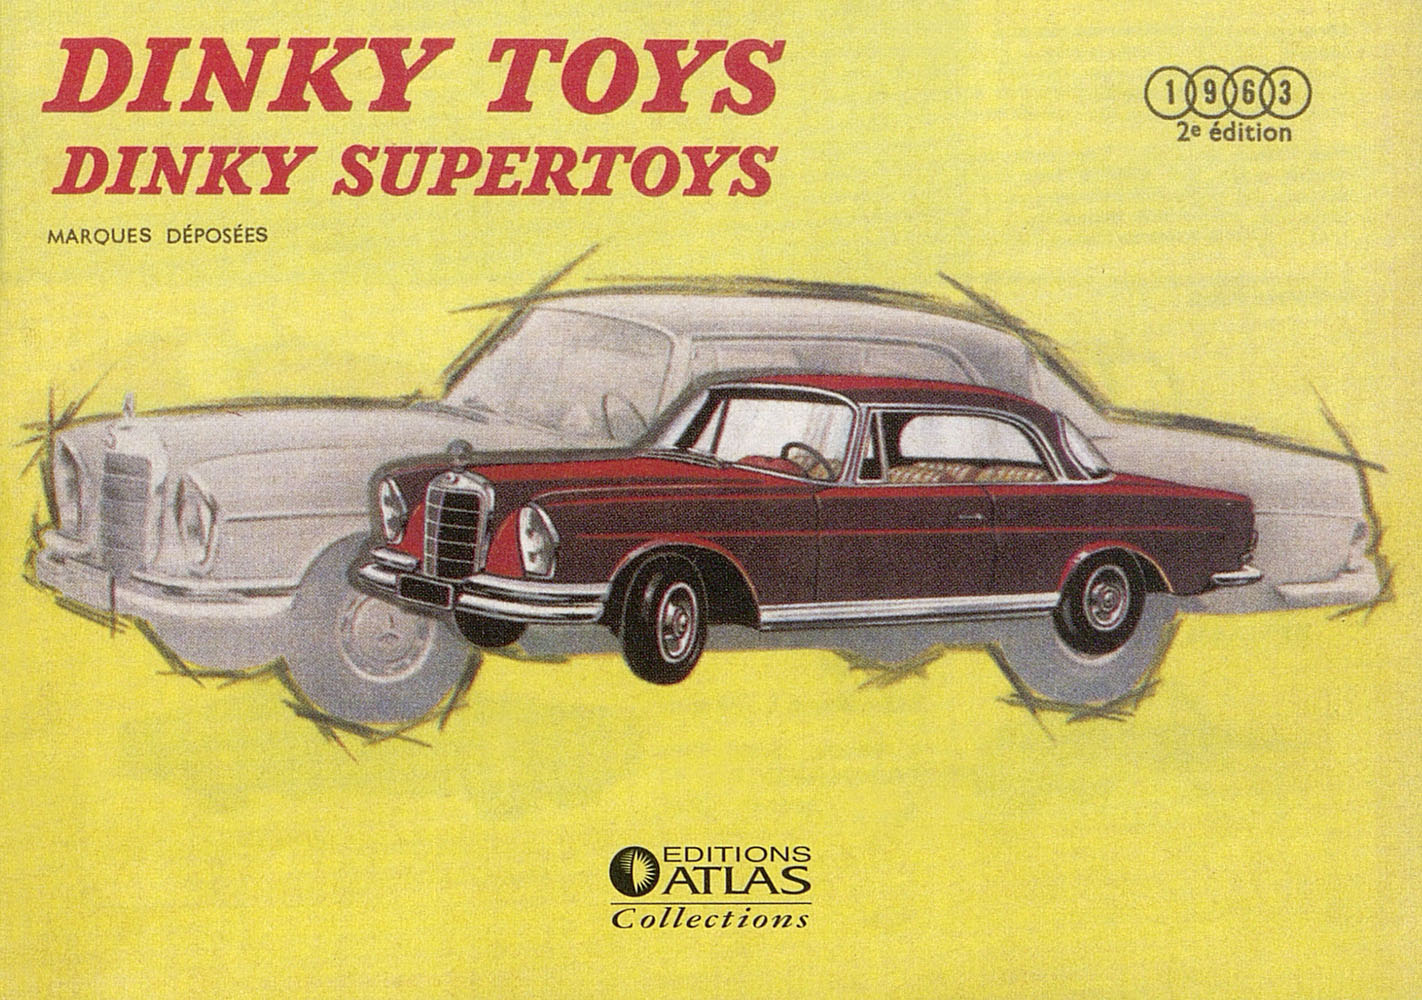 Dinky Toys Katalog 1963 Reedition Atlas 2013, Dinky Supertoys